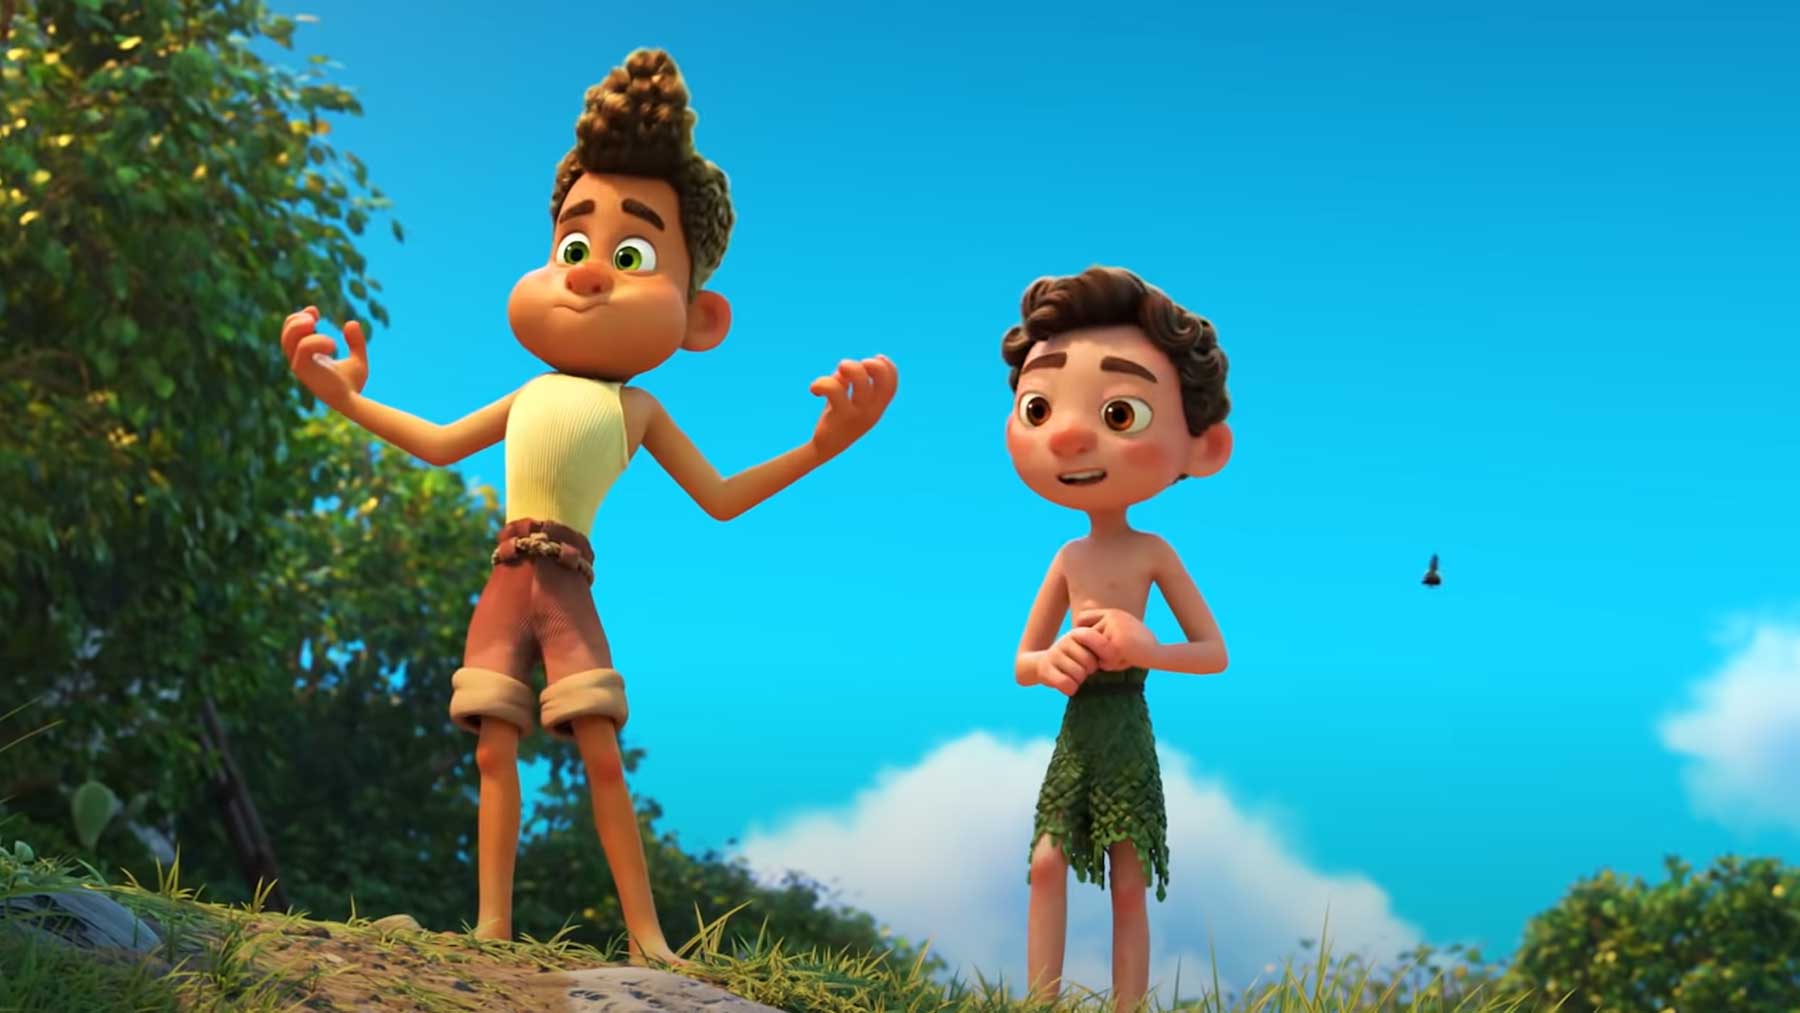 Offizieller Trailer zum neuen Disney-Pixar-Film "Luca" Disney-Pixar-Luca-Trailer 